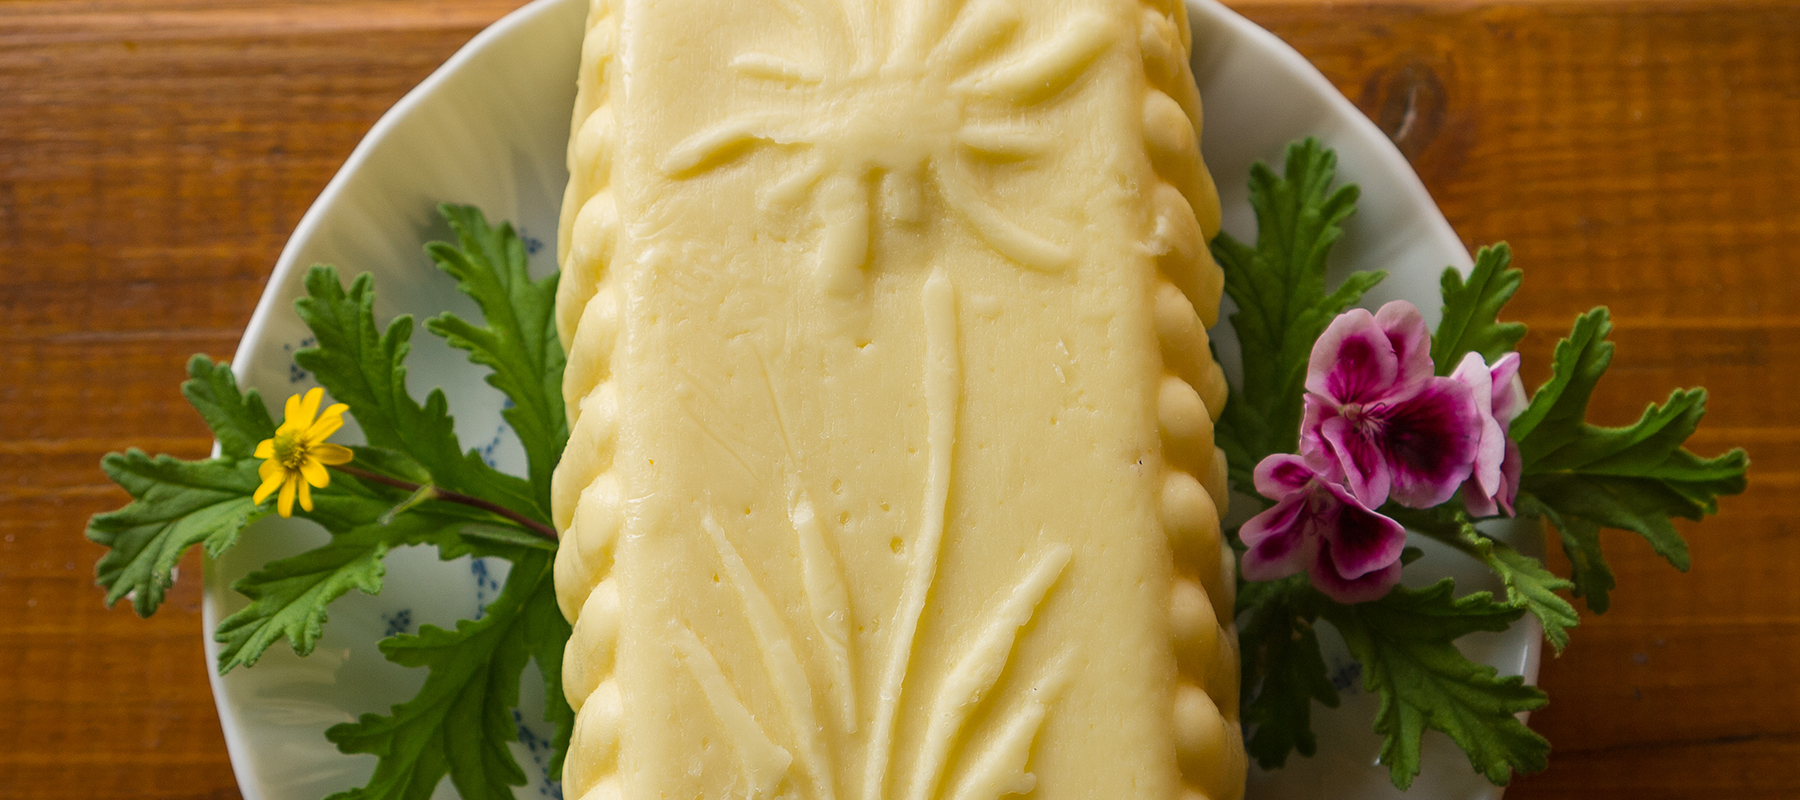 unsere selbsgemachte Butter